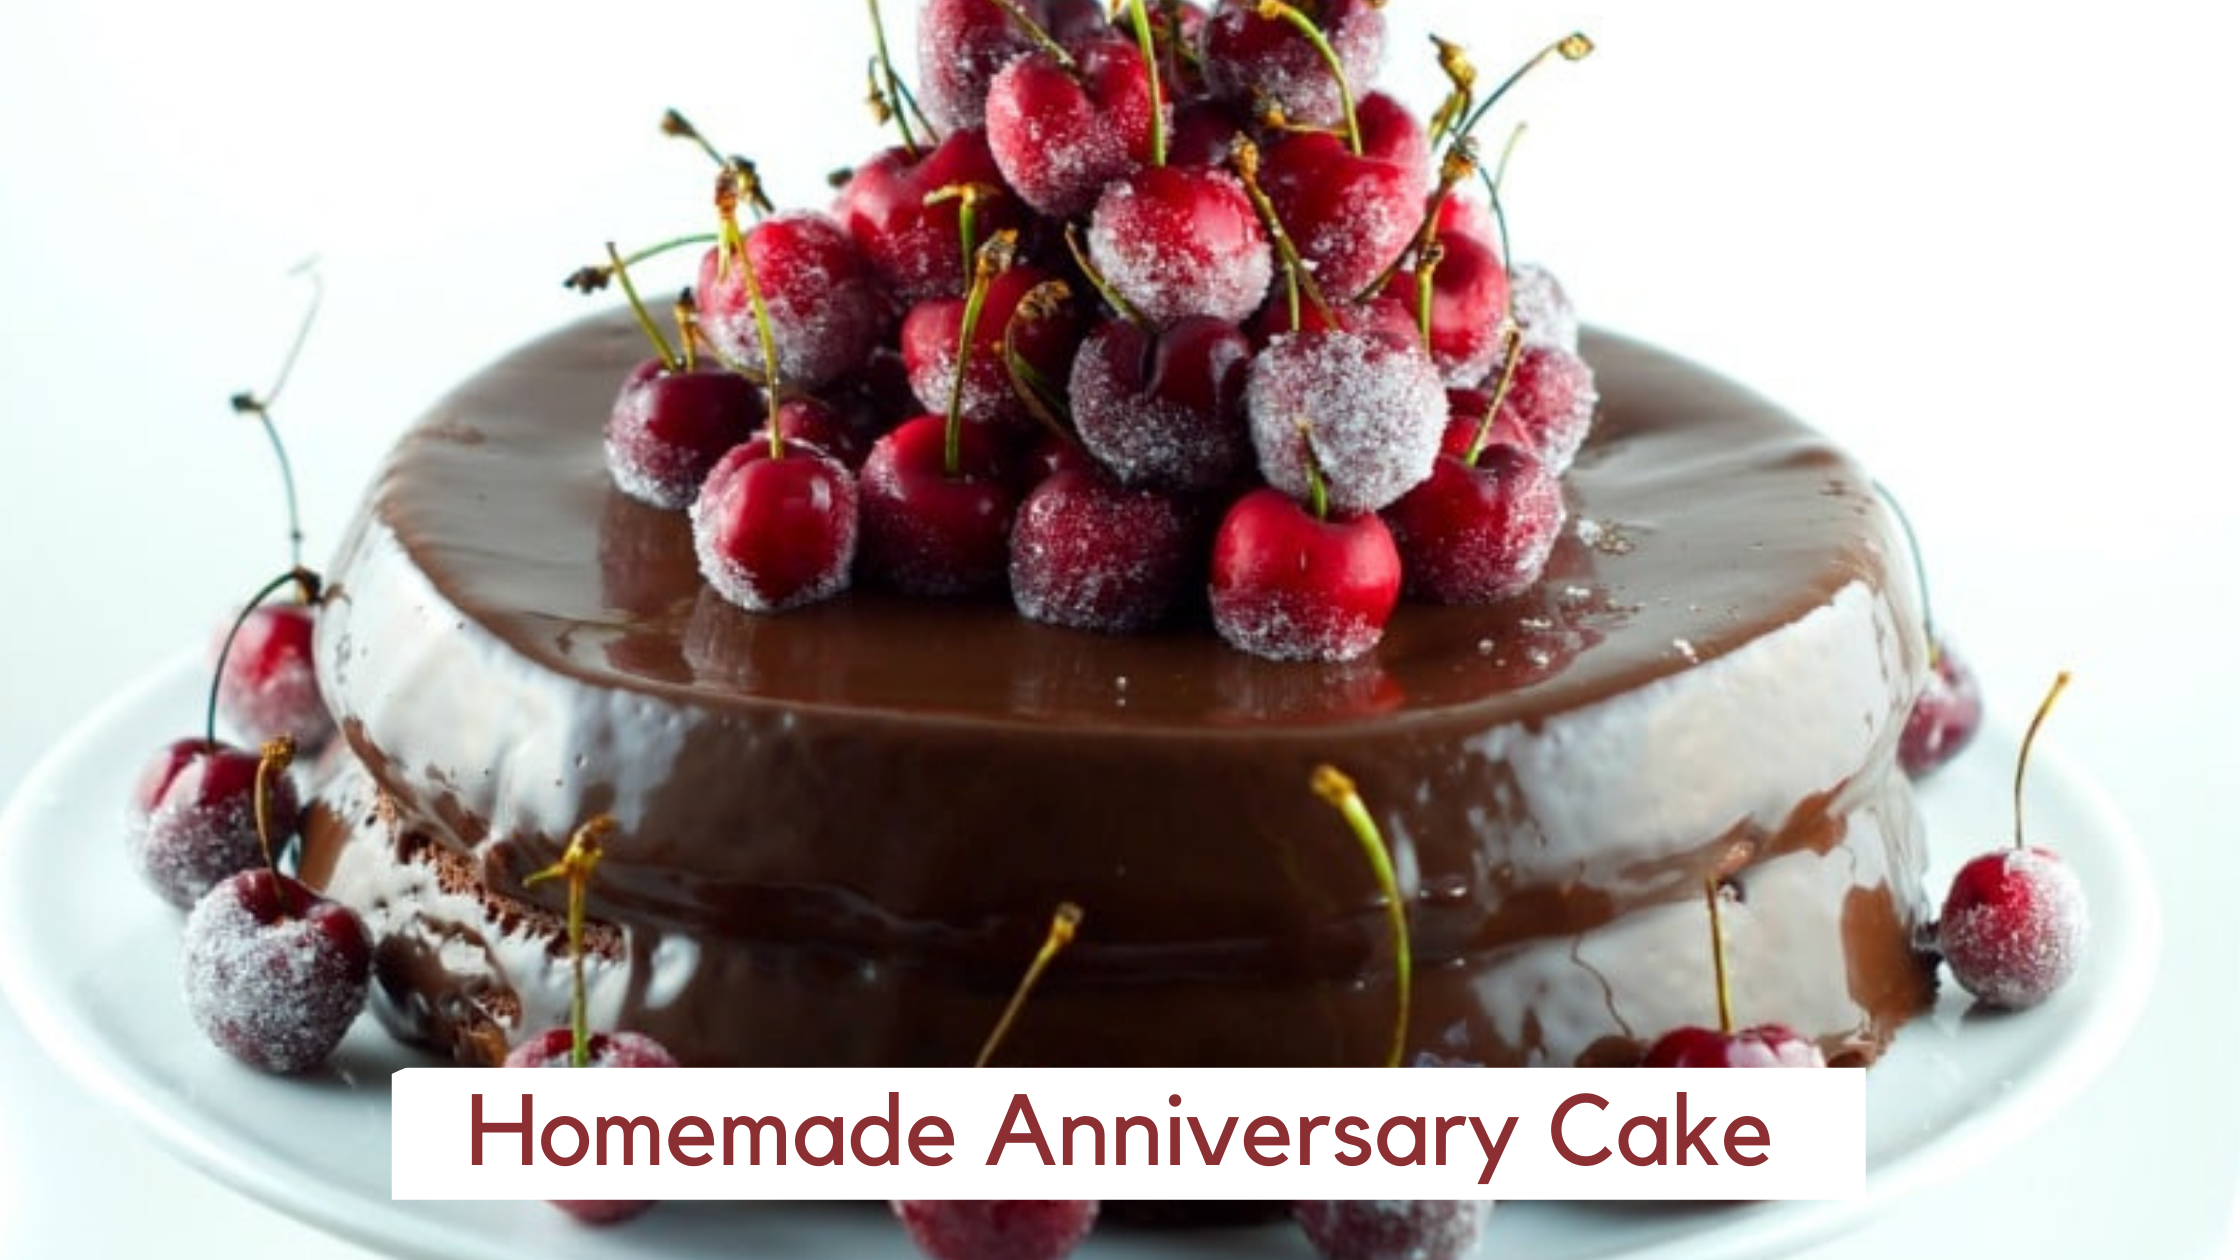 Homemade] Anniversary Cake : r/food